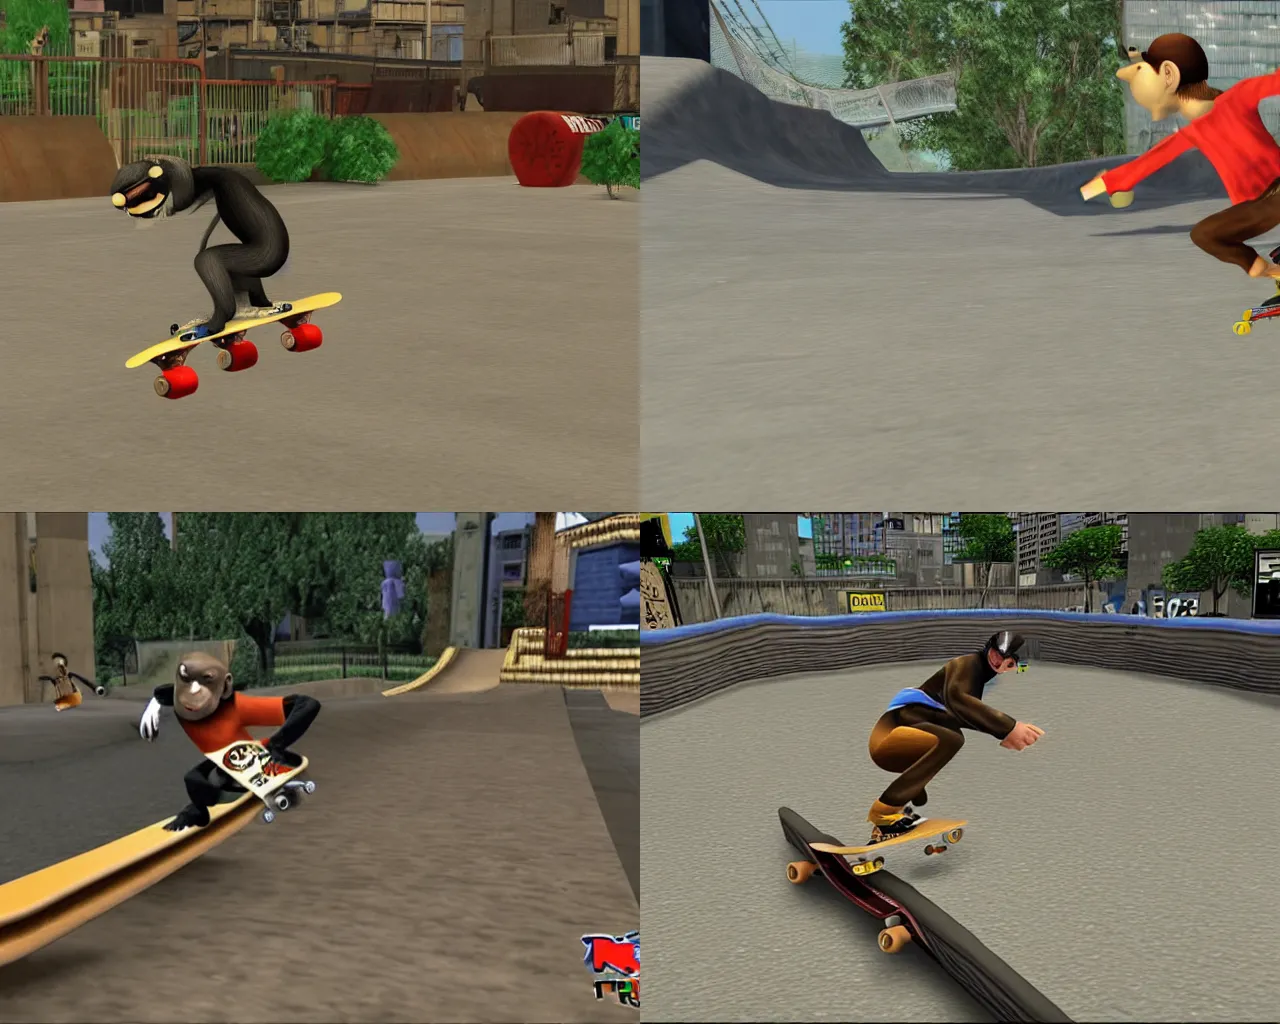 Prompt: a monkey riding a skateboard in tony hawk's pro skater 3, playstation 2 gameplay still